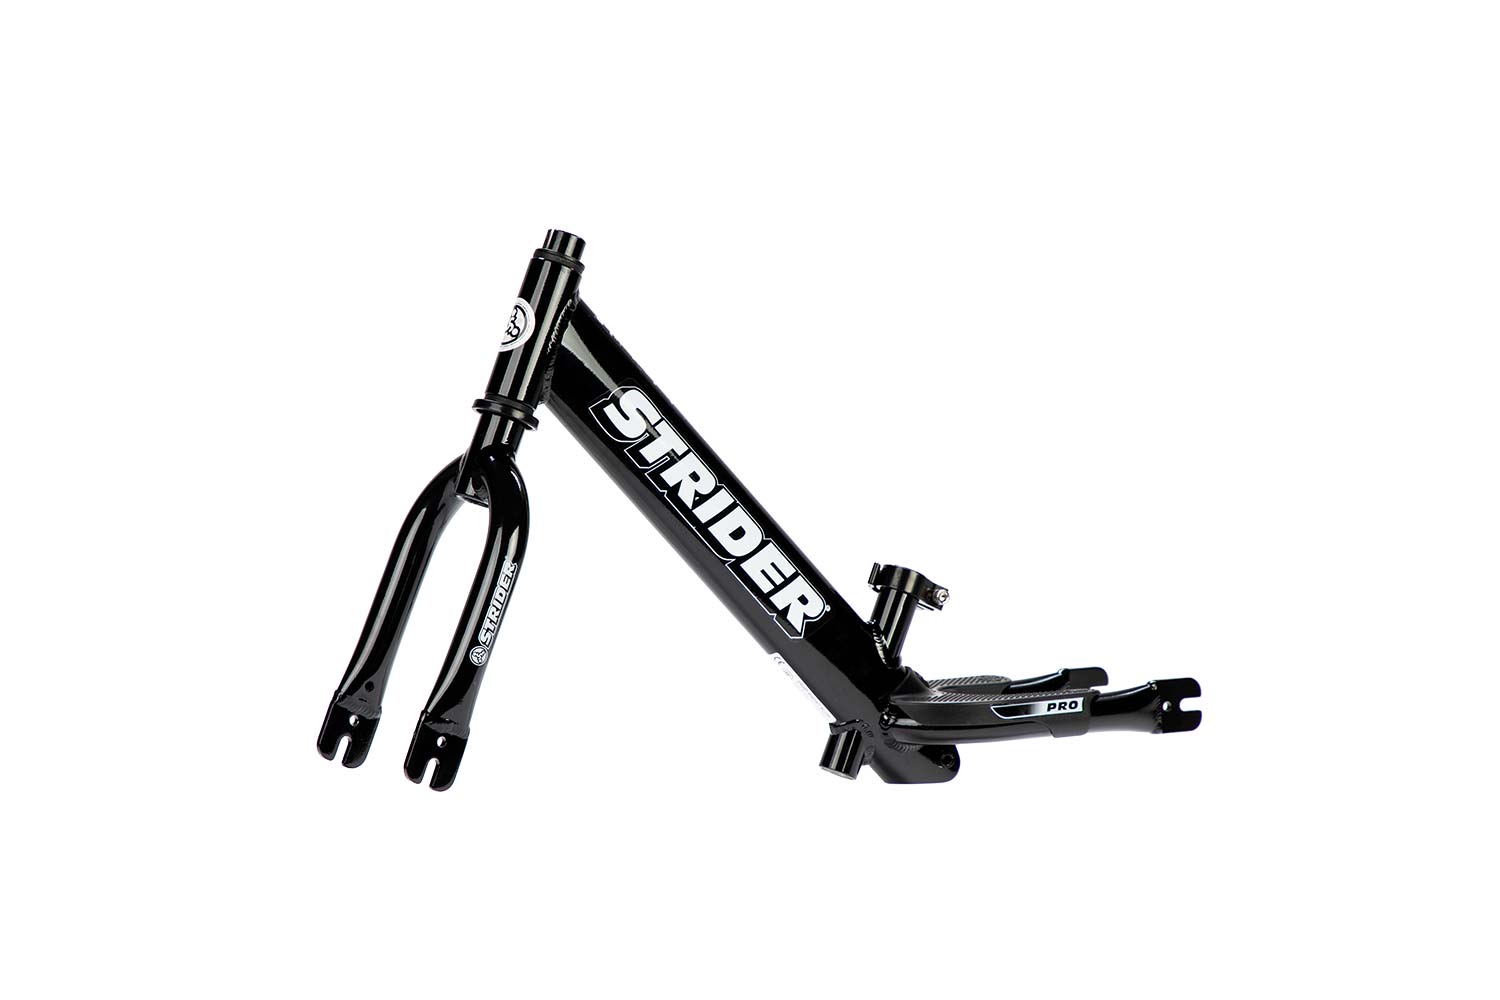 Black Strider 12 Pro bike frame